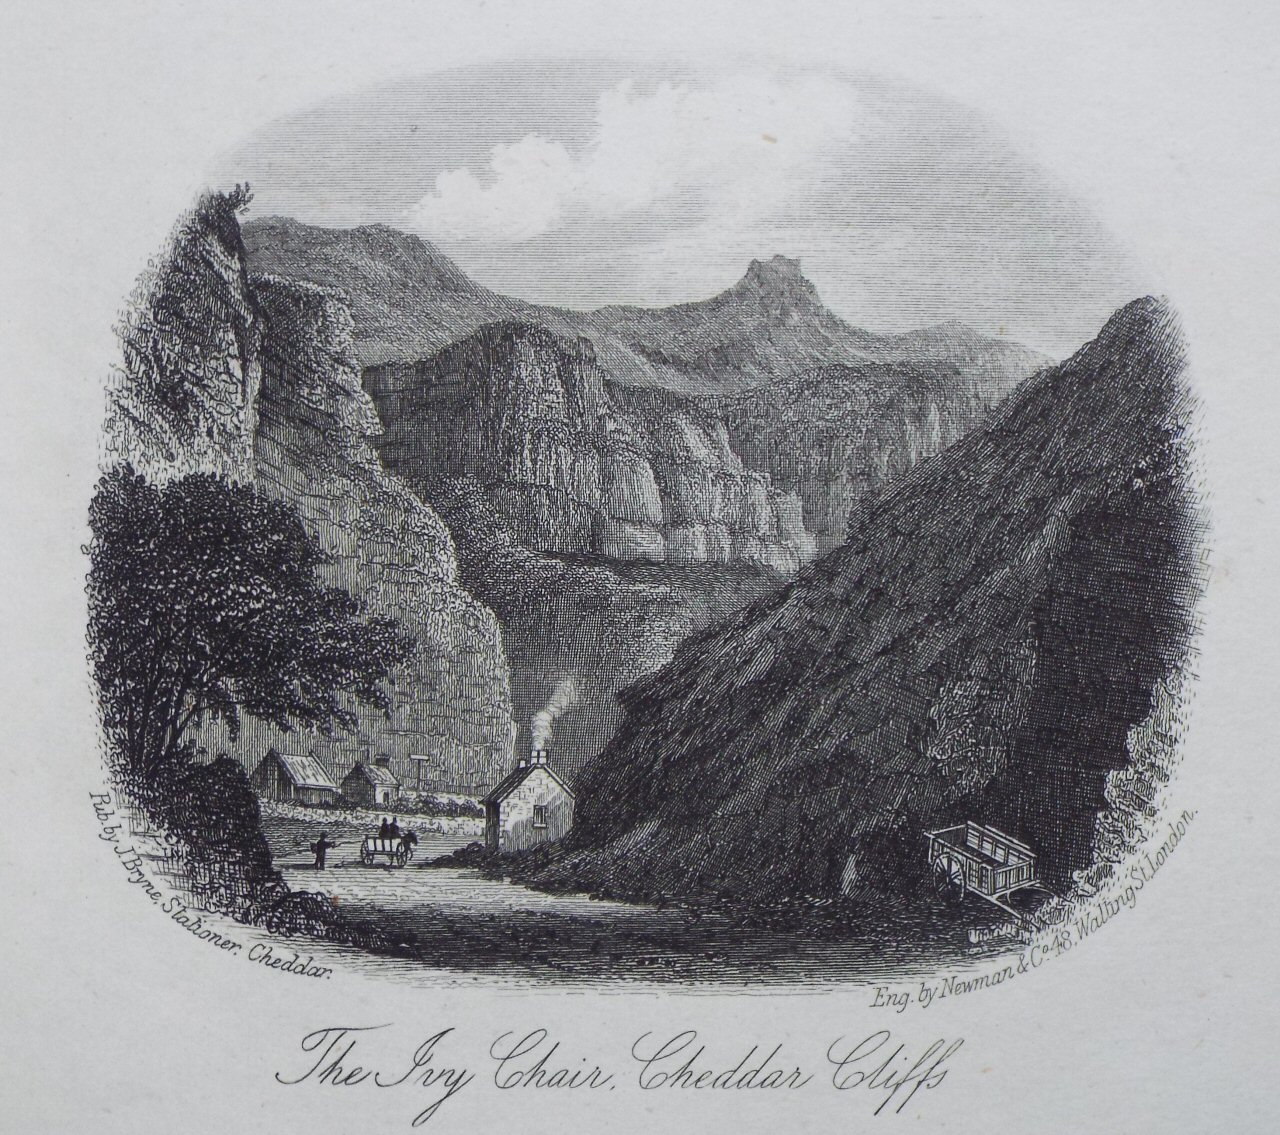 Steel Vignette - The Ivy Chair, Cheddar Cliffs - Newman